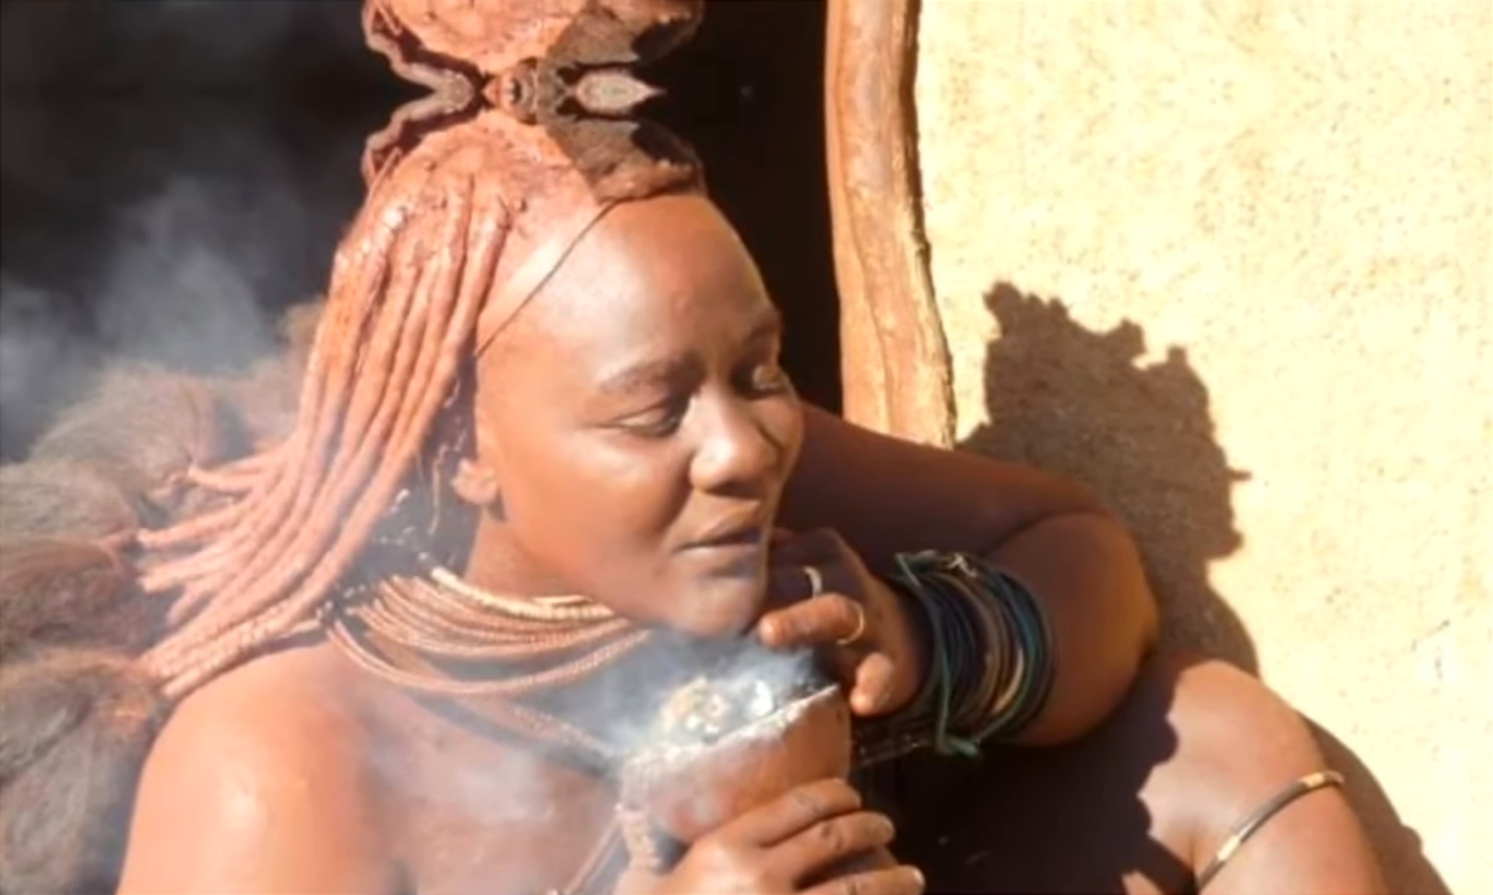 Tradisi Aneh Suku di Afrika, 'Suguhkan' Istri Kepada Tamu Hingga Tukar Pasangan 